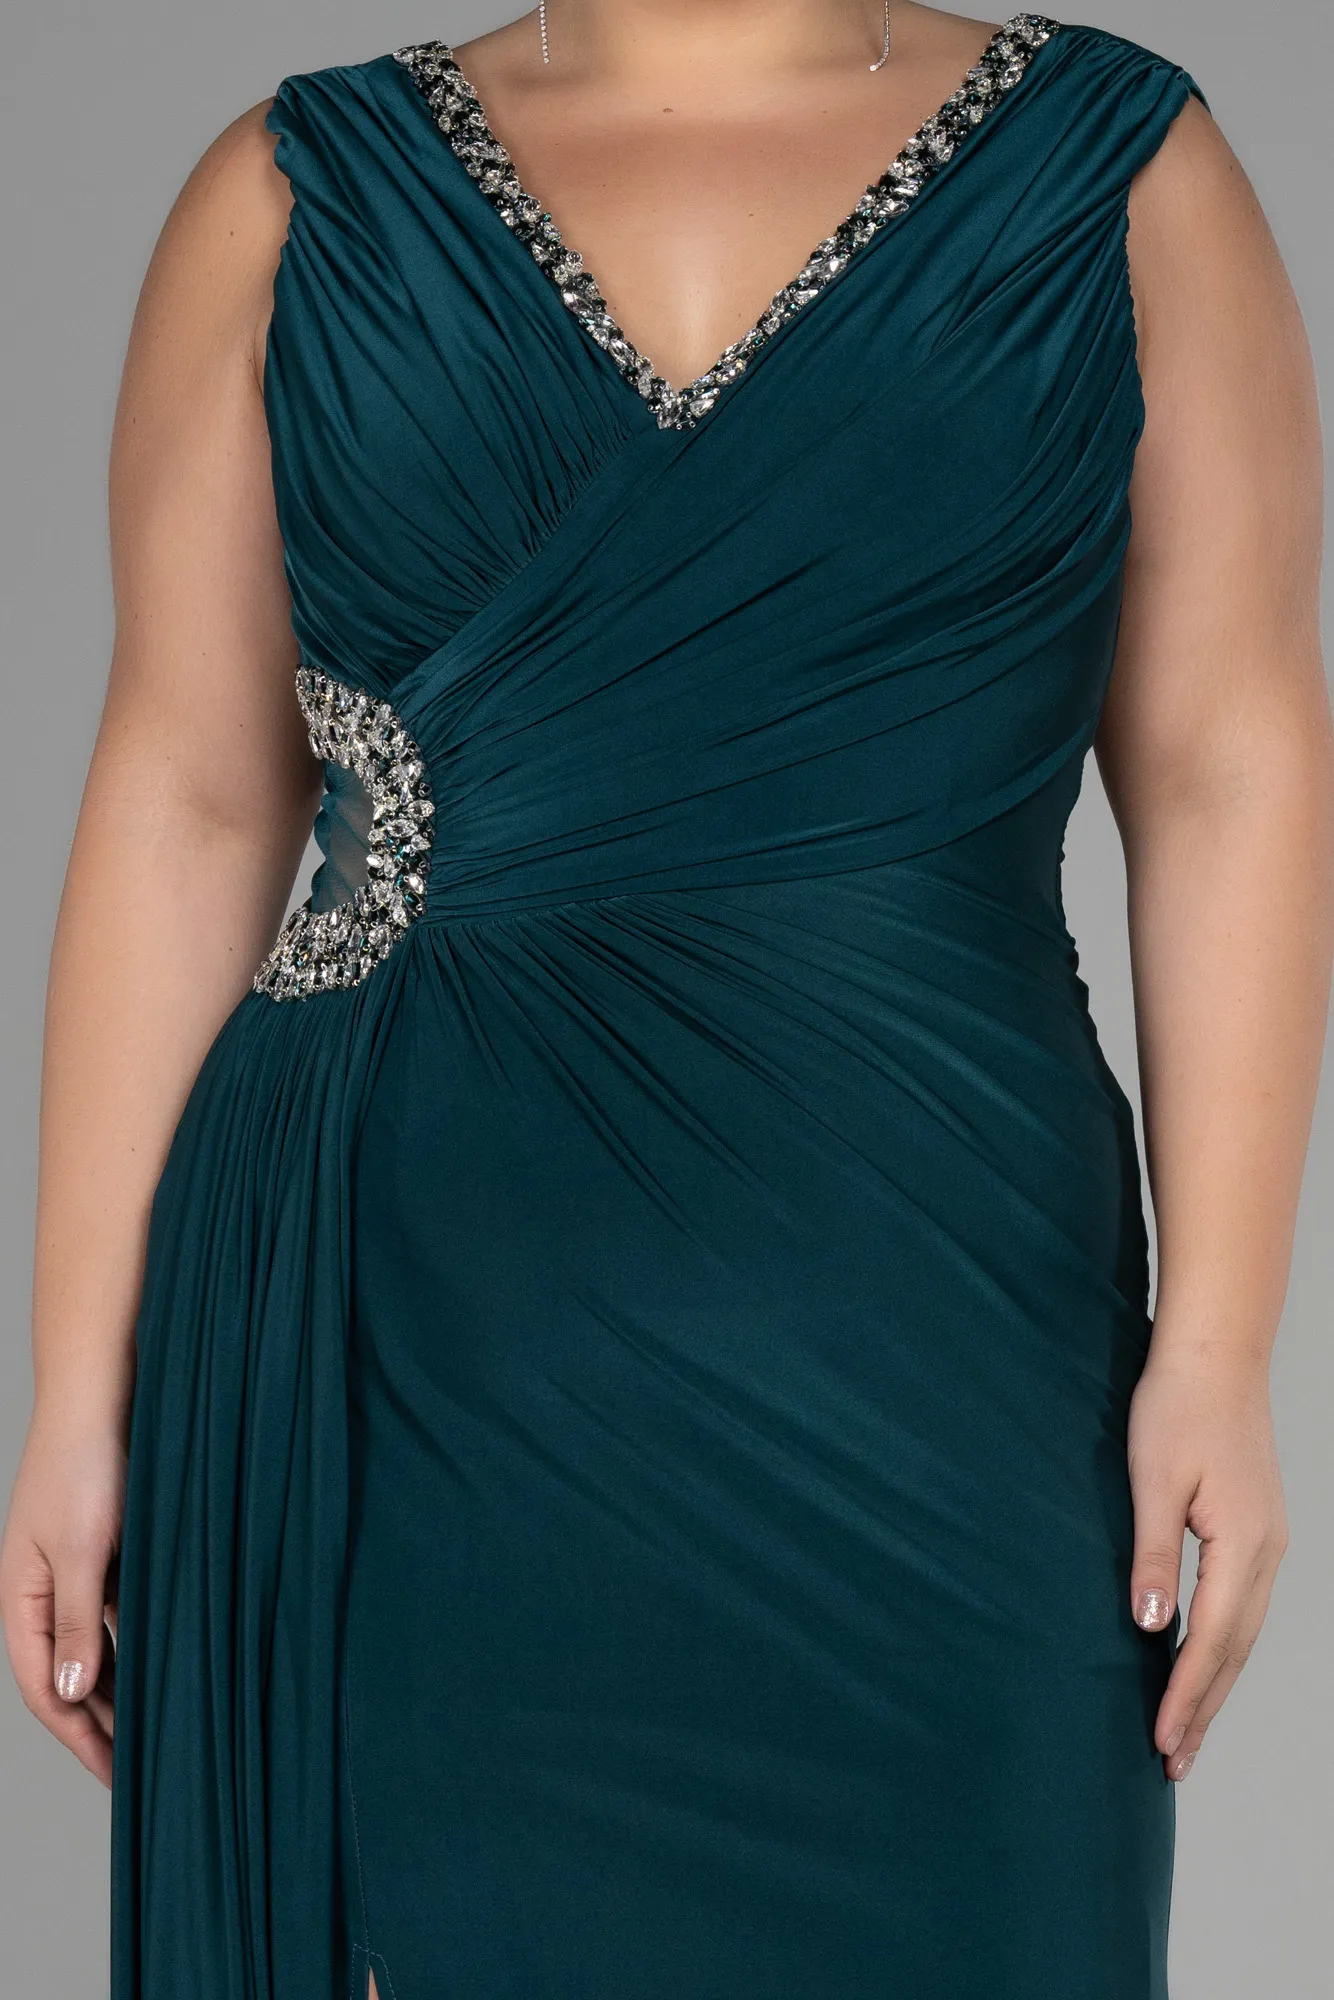 Emerald Green-Long Plus Size Evening Dress ABU3372